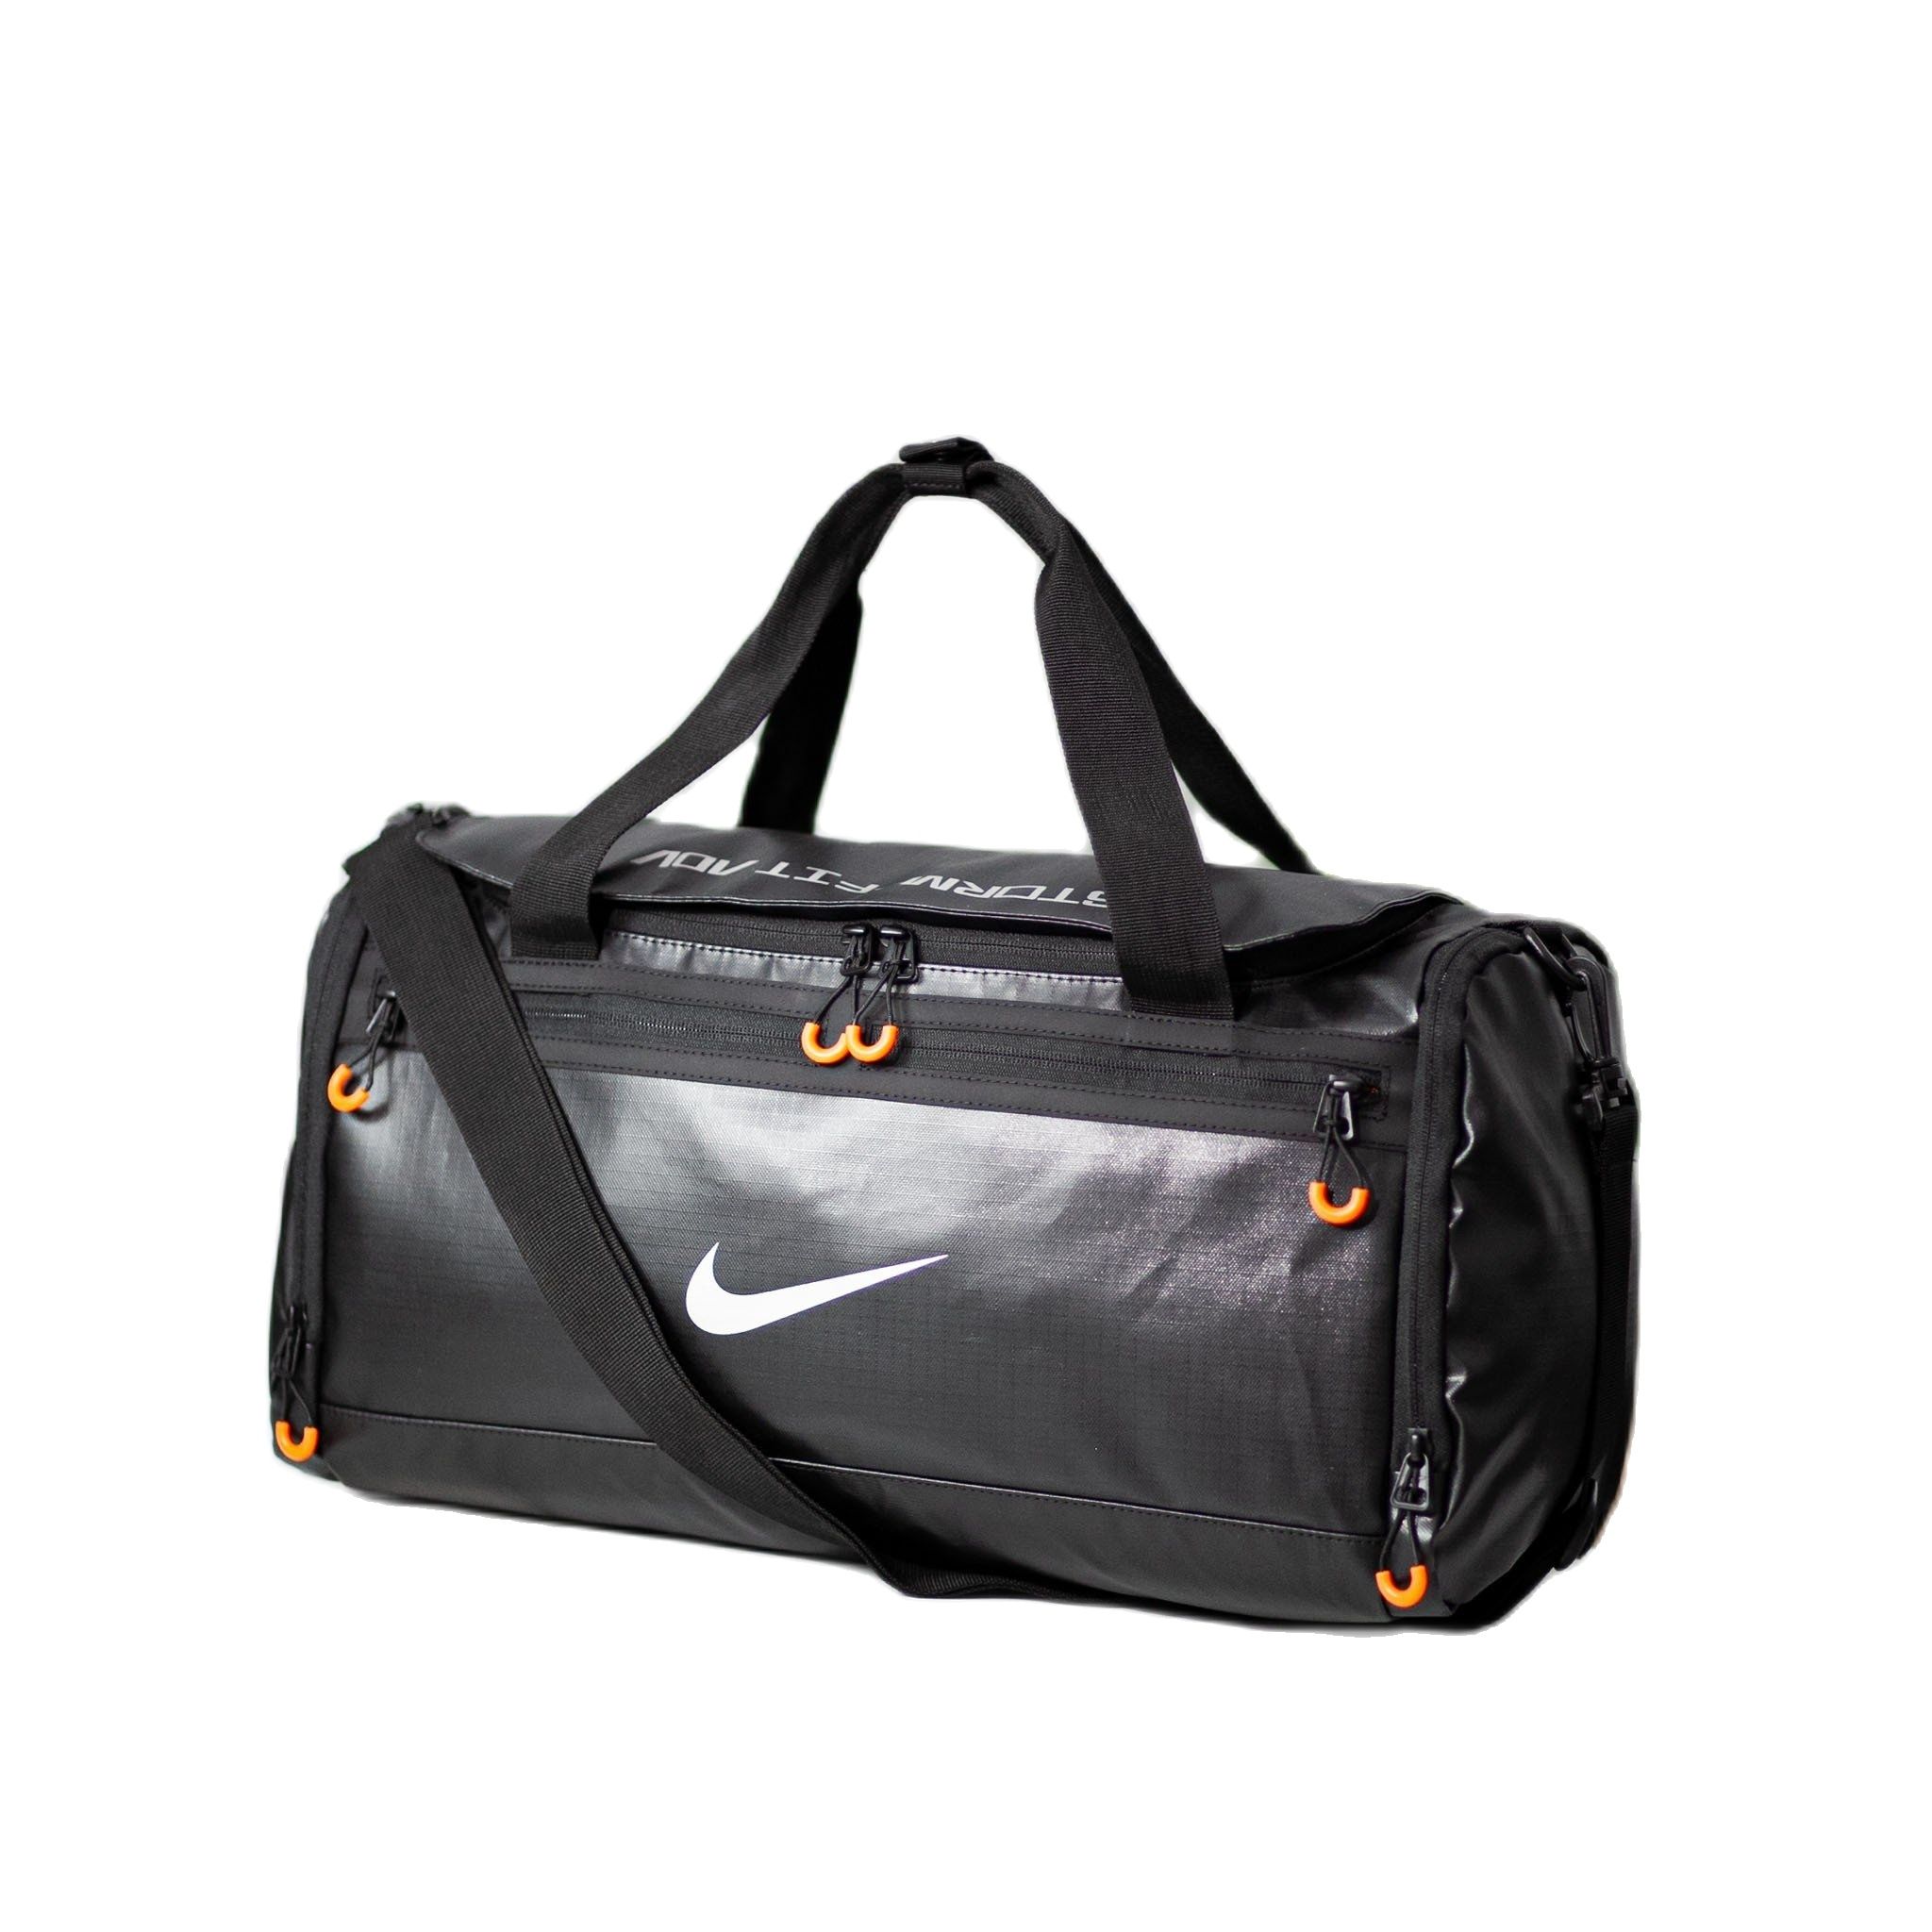 Nike Storm-Fit ADV Utility Power Duffel Bag made of waterproof TPE material